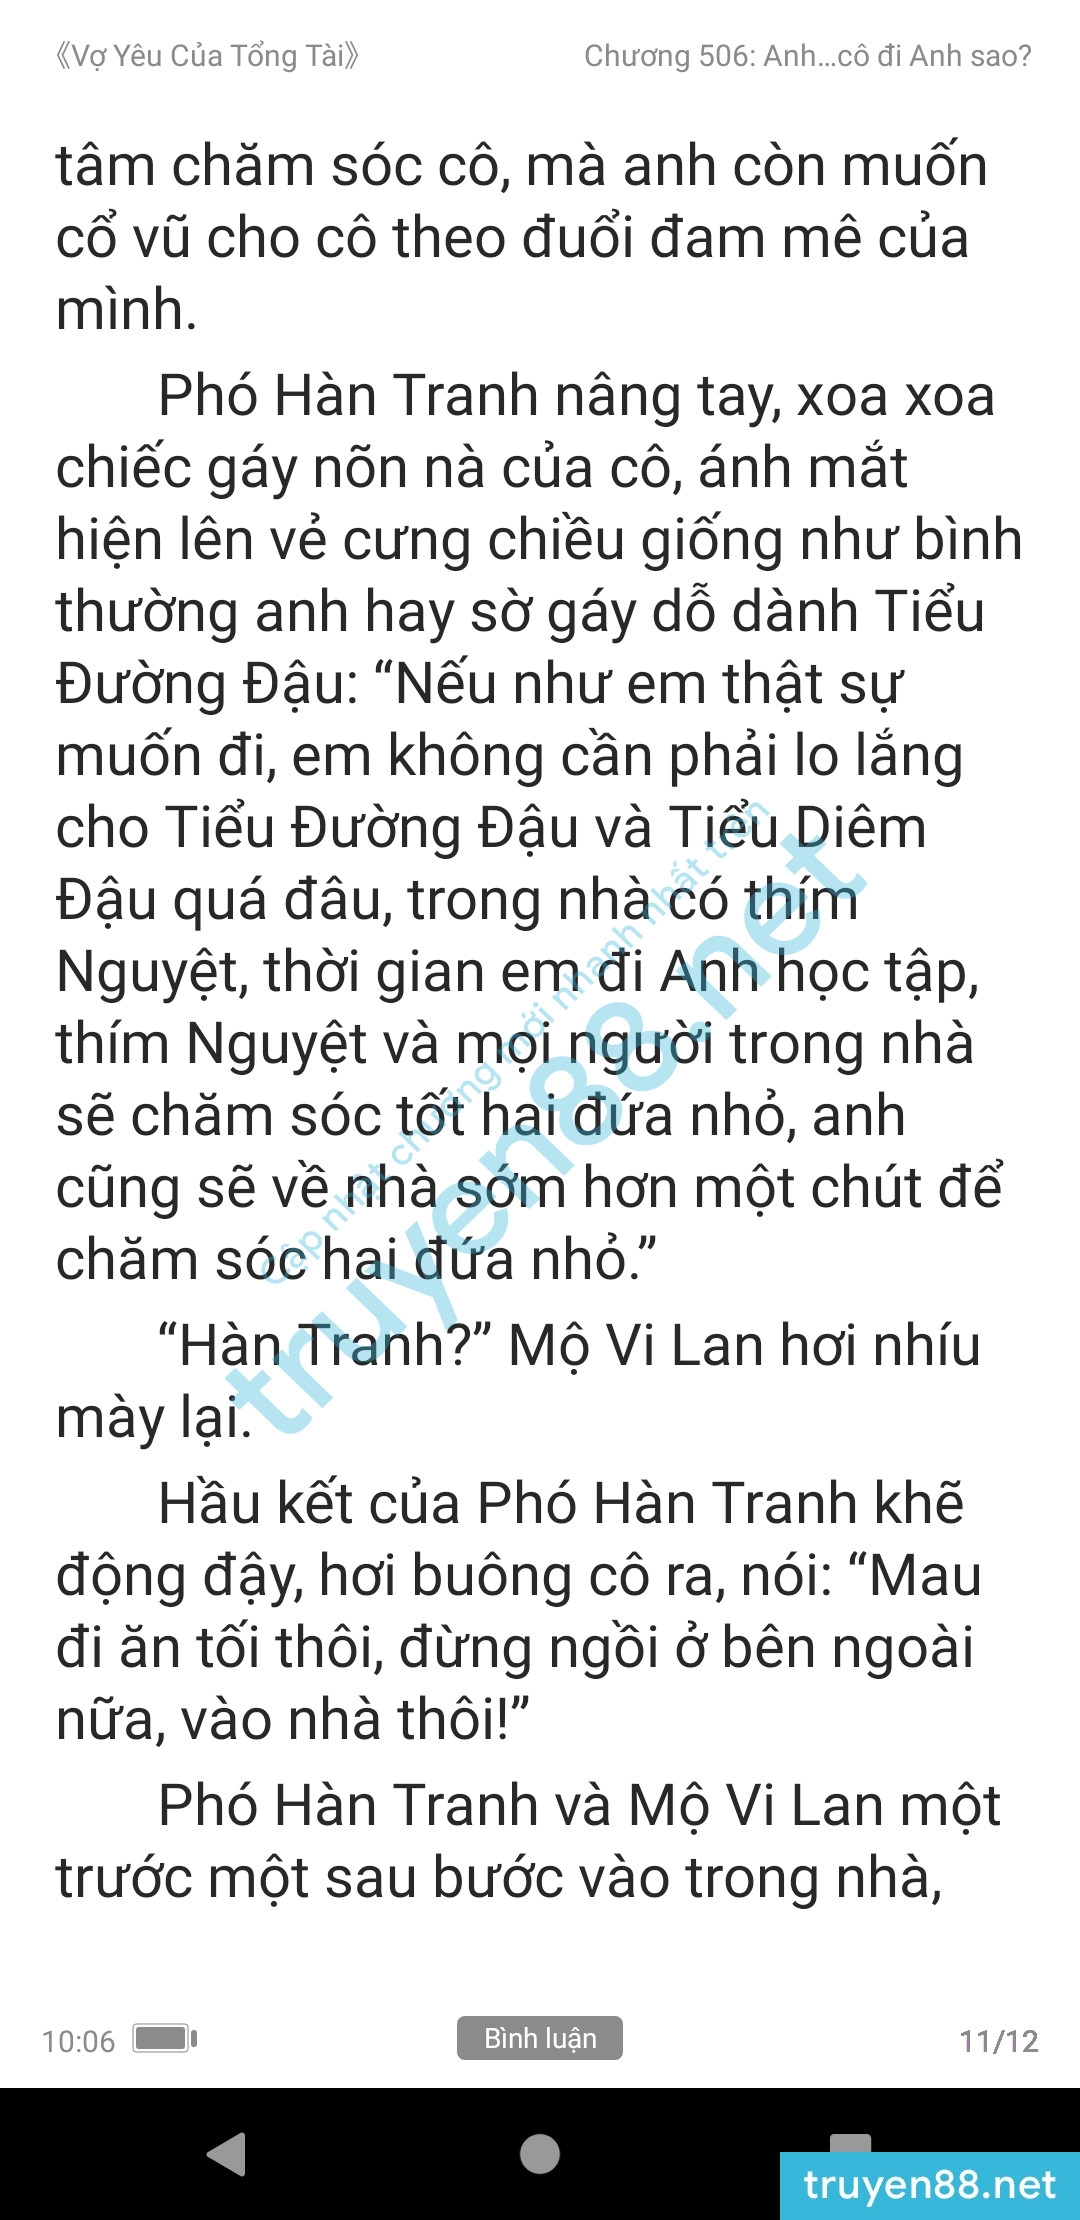 vo-yeu-cua-tong-tai-mo-vi-lan--pho-han-tranh-516-0